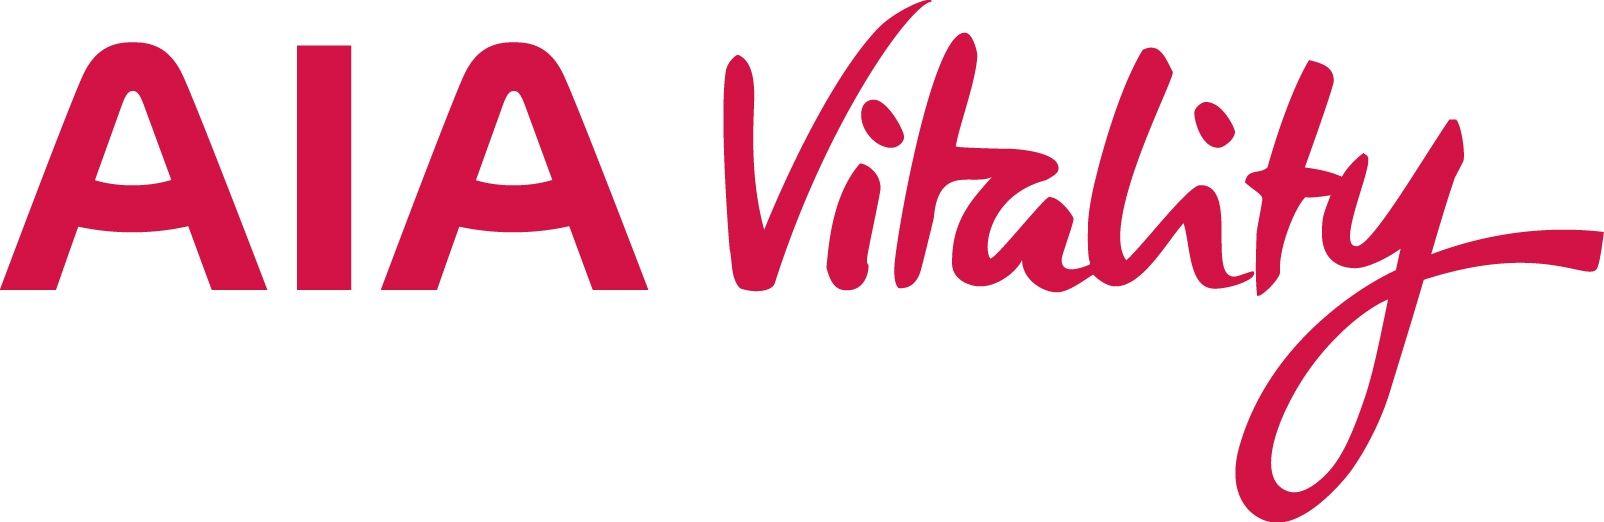 AIA Logo - AIA Logo Vector (.AI) Free Download. Aia. Wellness programs